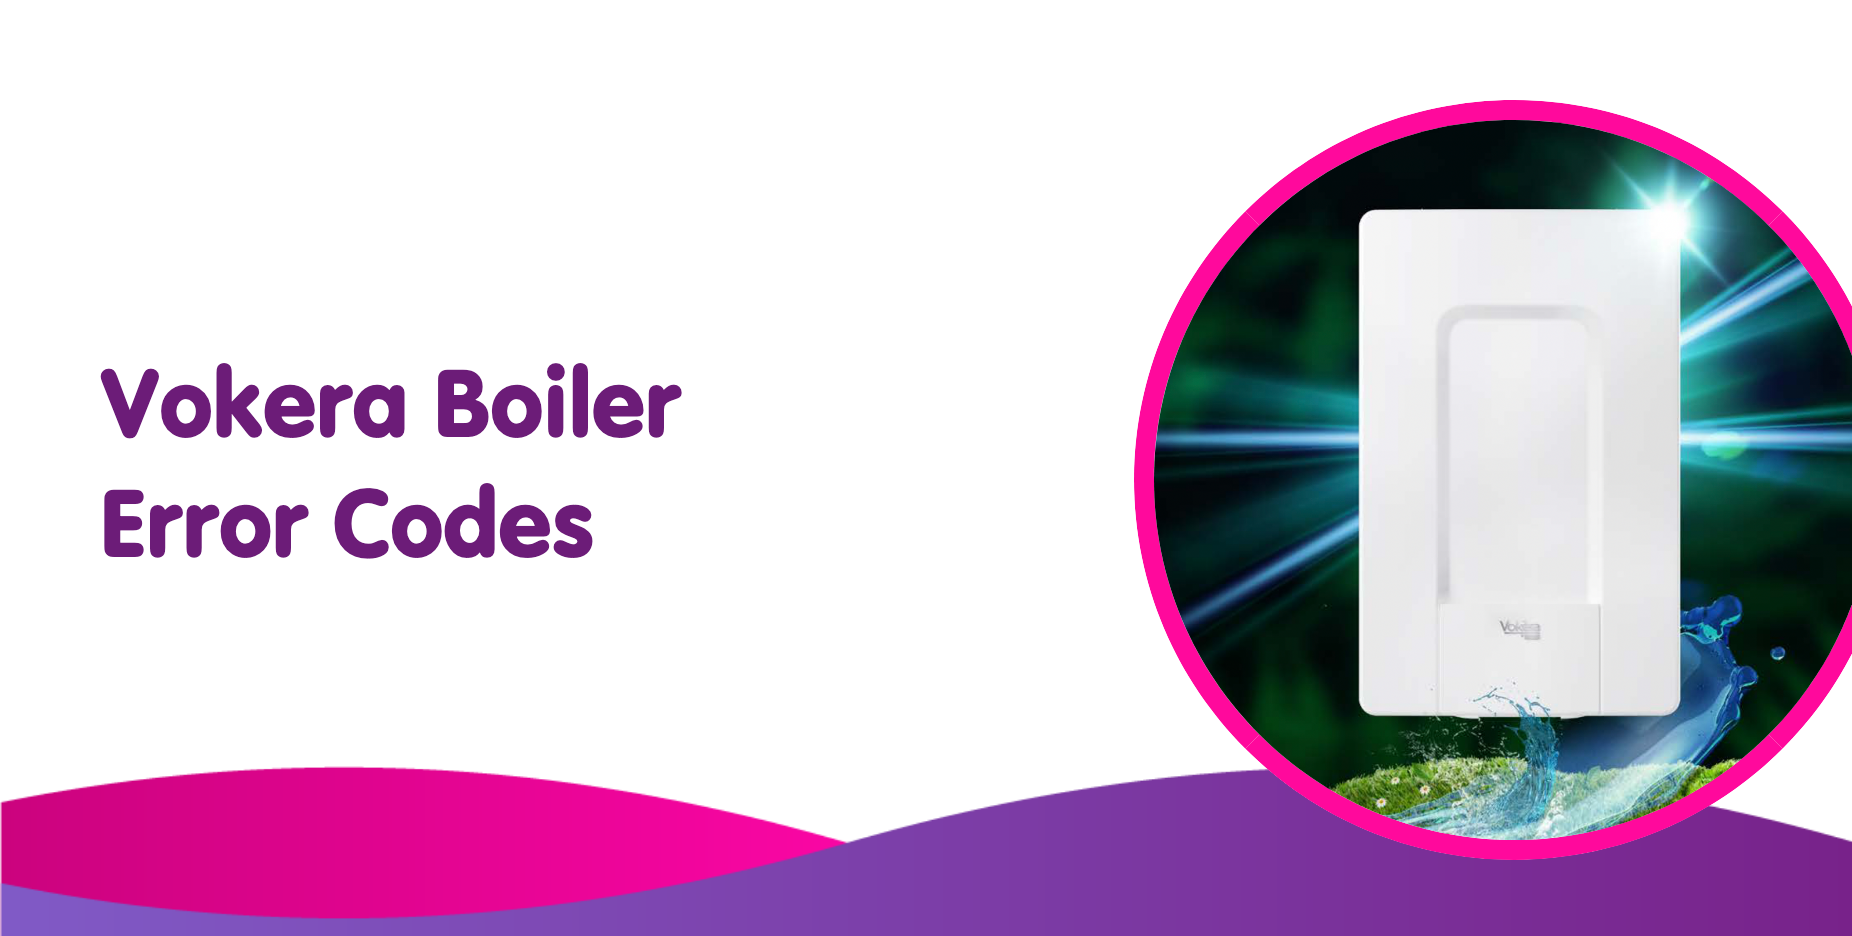 Vokera Boiler Error Codes